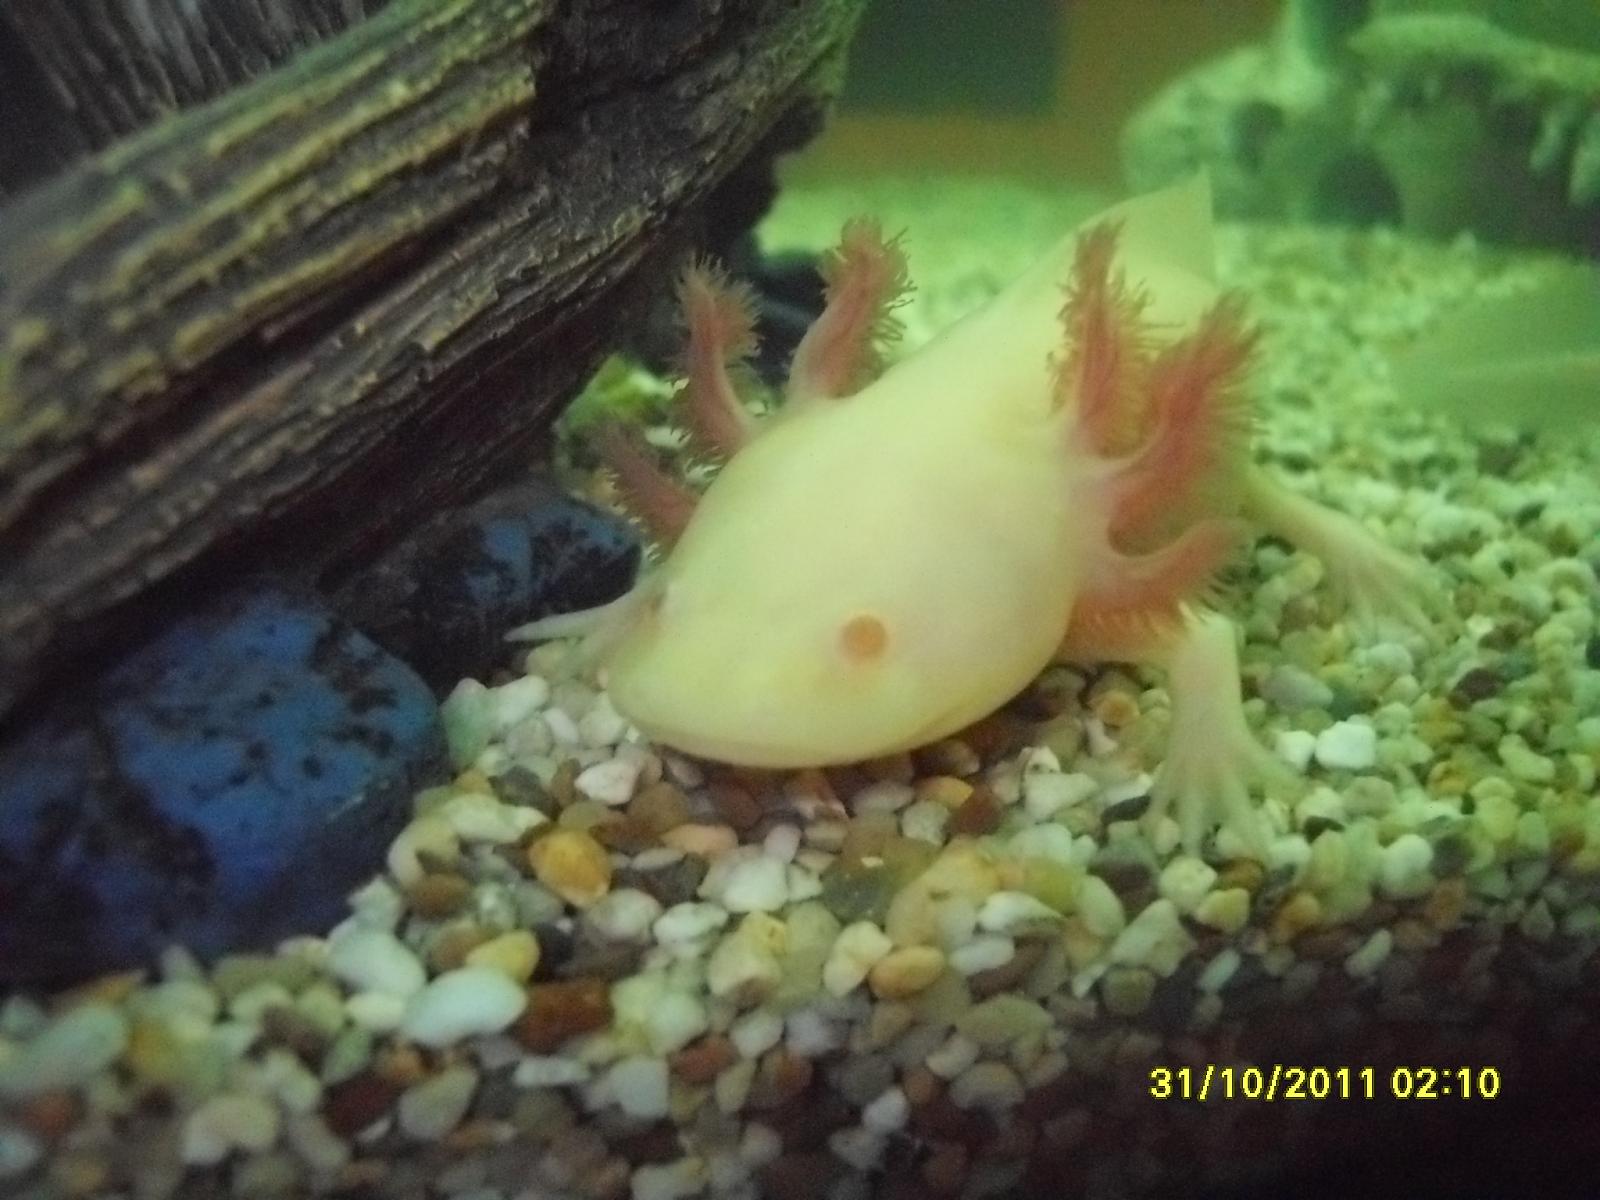 my axolotl